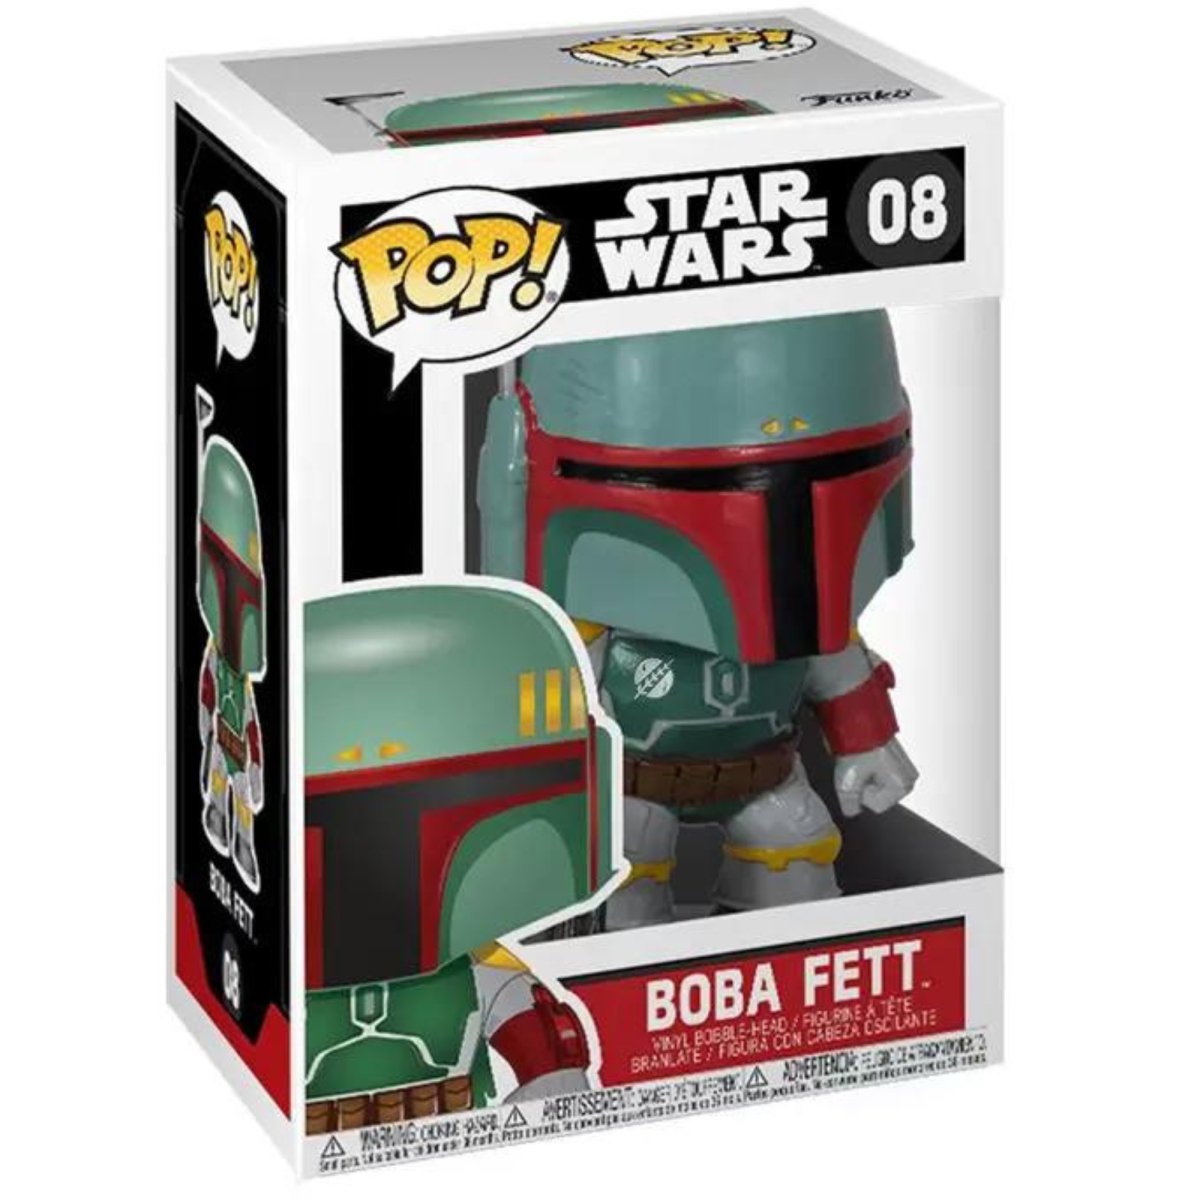 Star Wars - Boba Fett #08 - Funko Pop! Vinyl Star Wars - Persona Toys